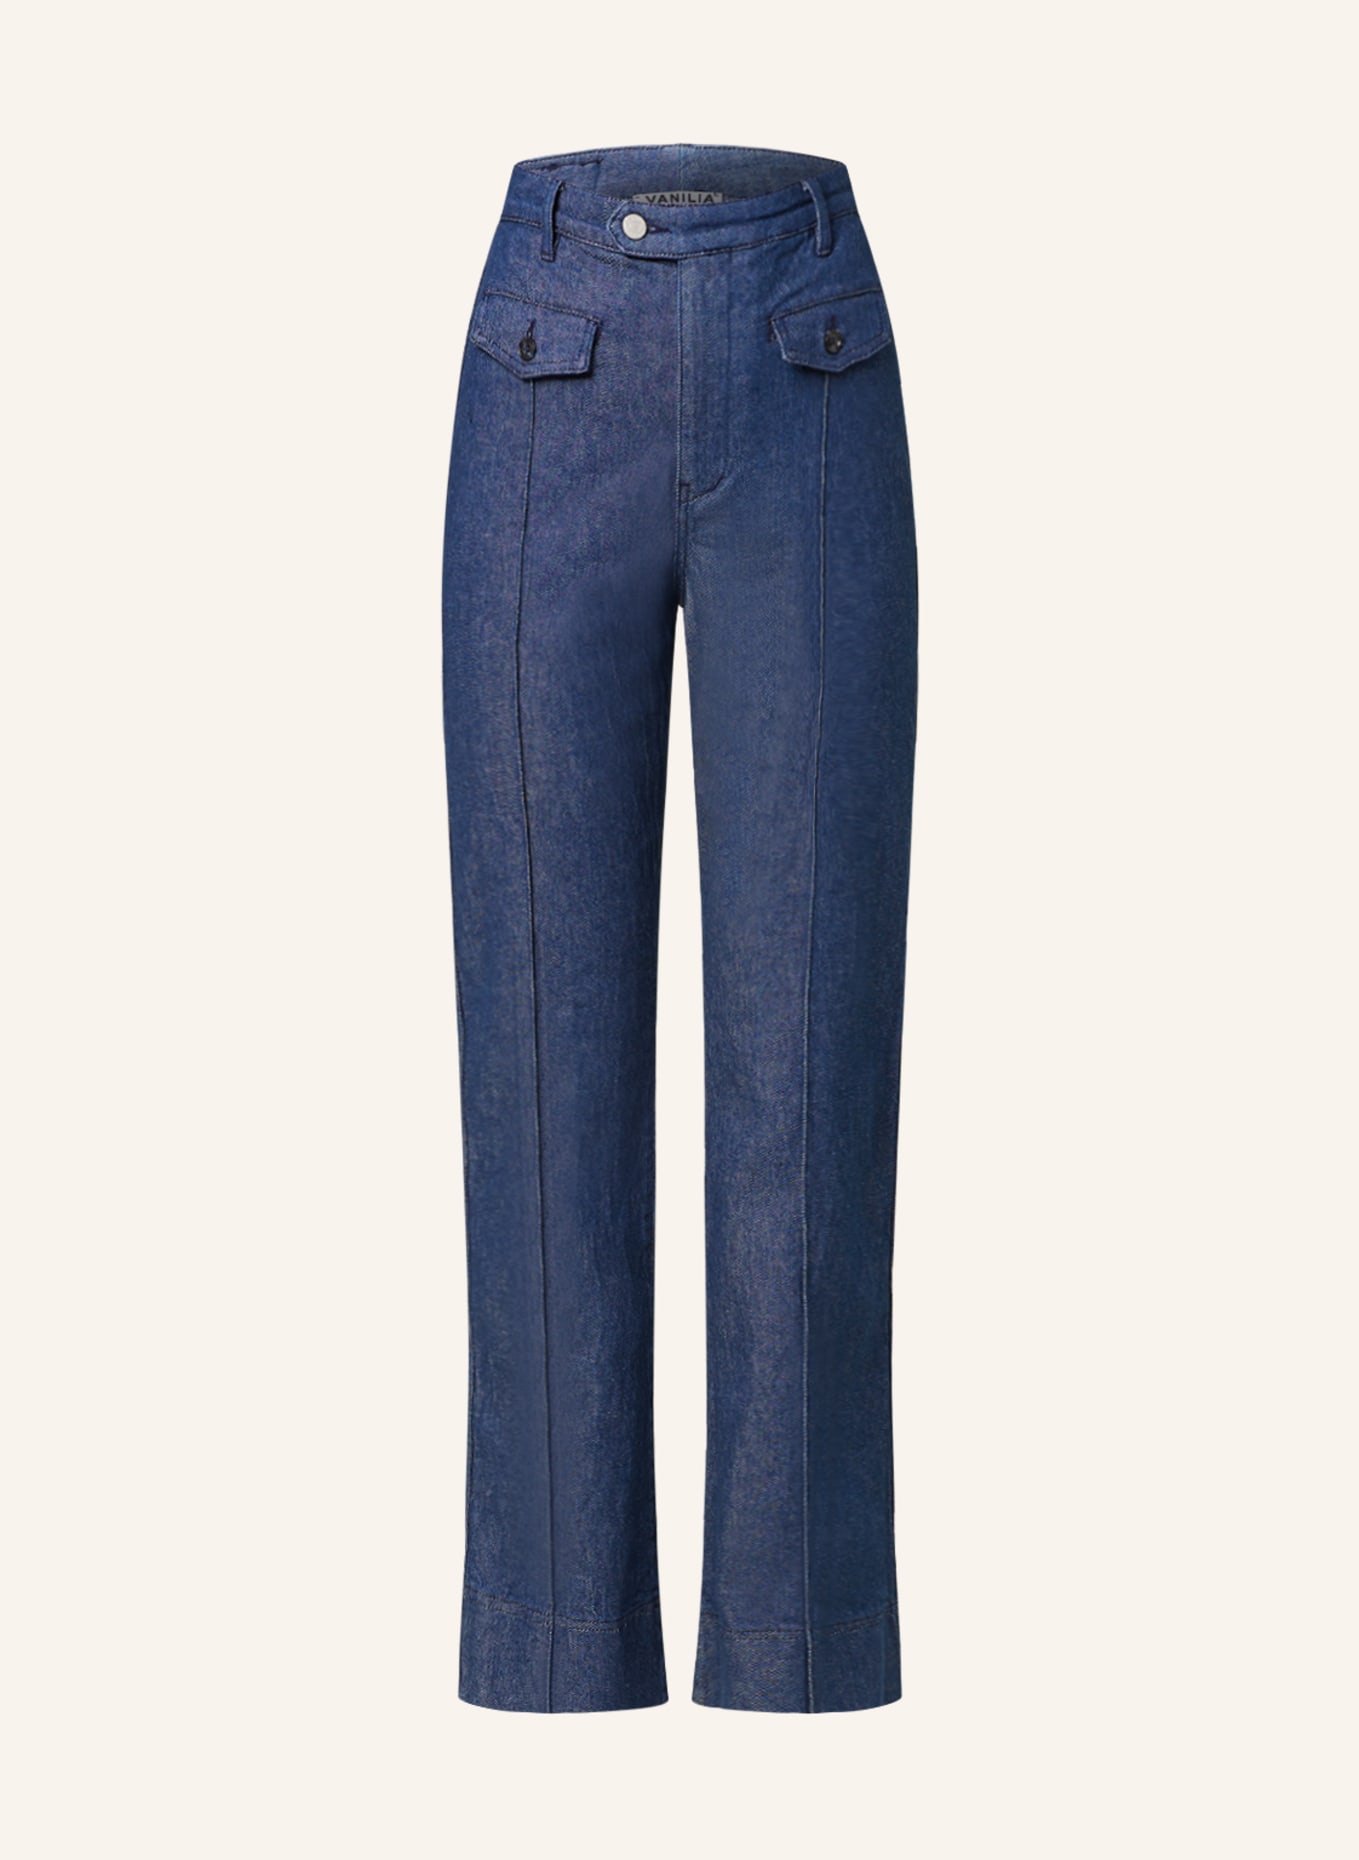 VANILIA Bootcut Jeans, Farbe: 882 Jeans (Bild 1)